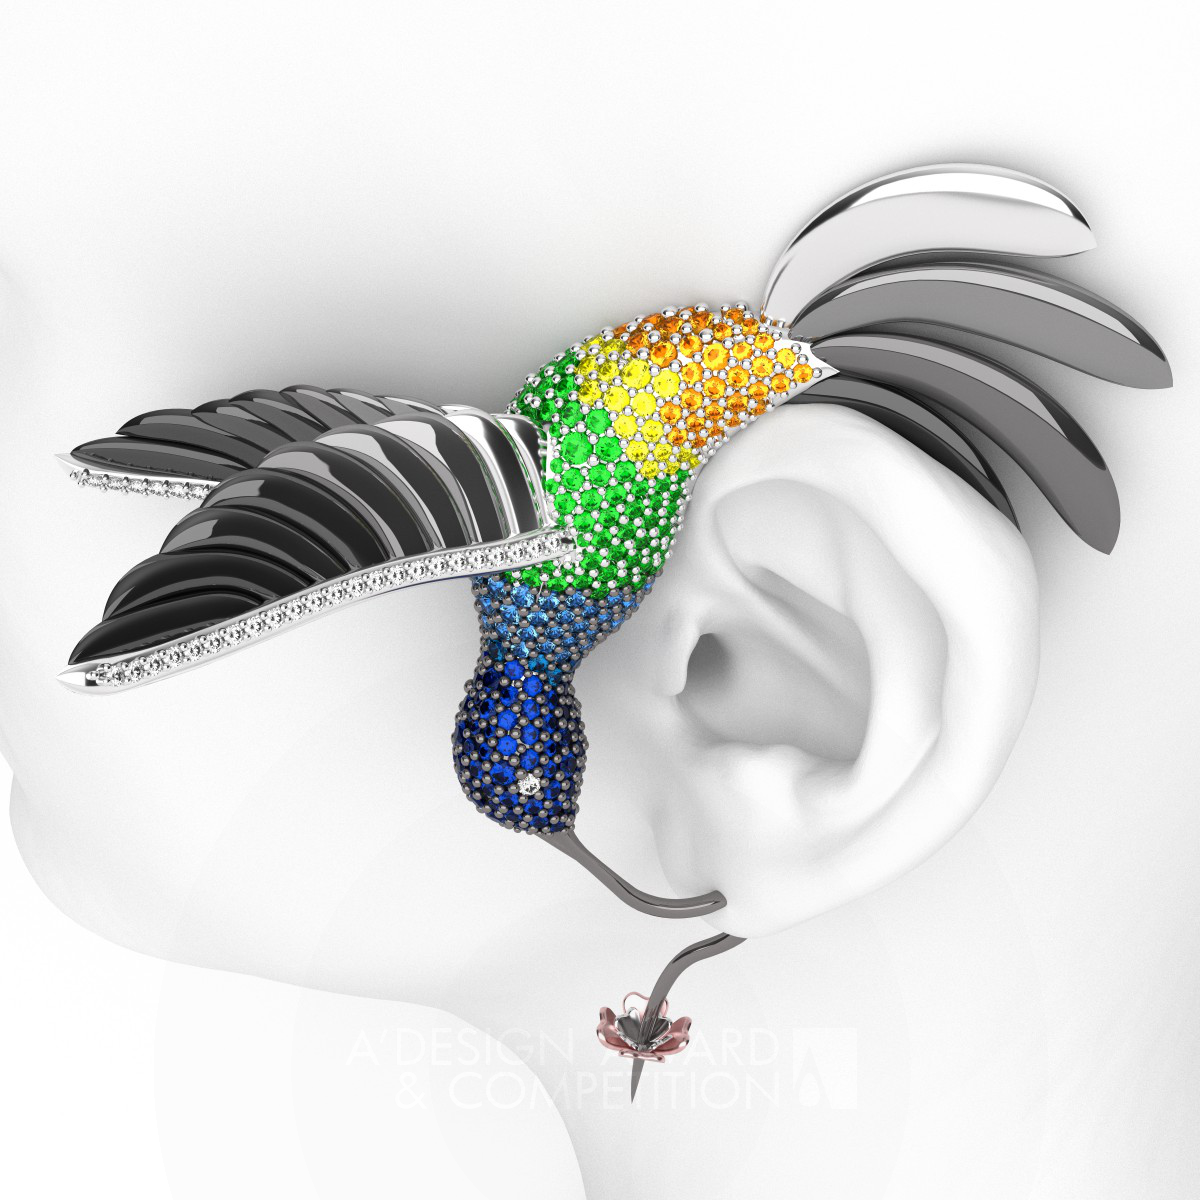 Eleonora Federici's "The Hummingbird" - A Unique Single Earring Masterpiece